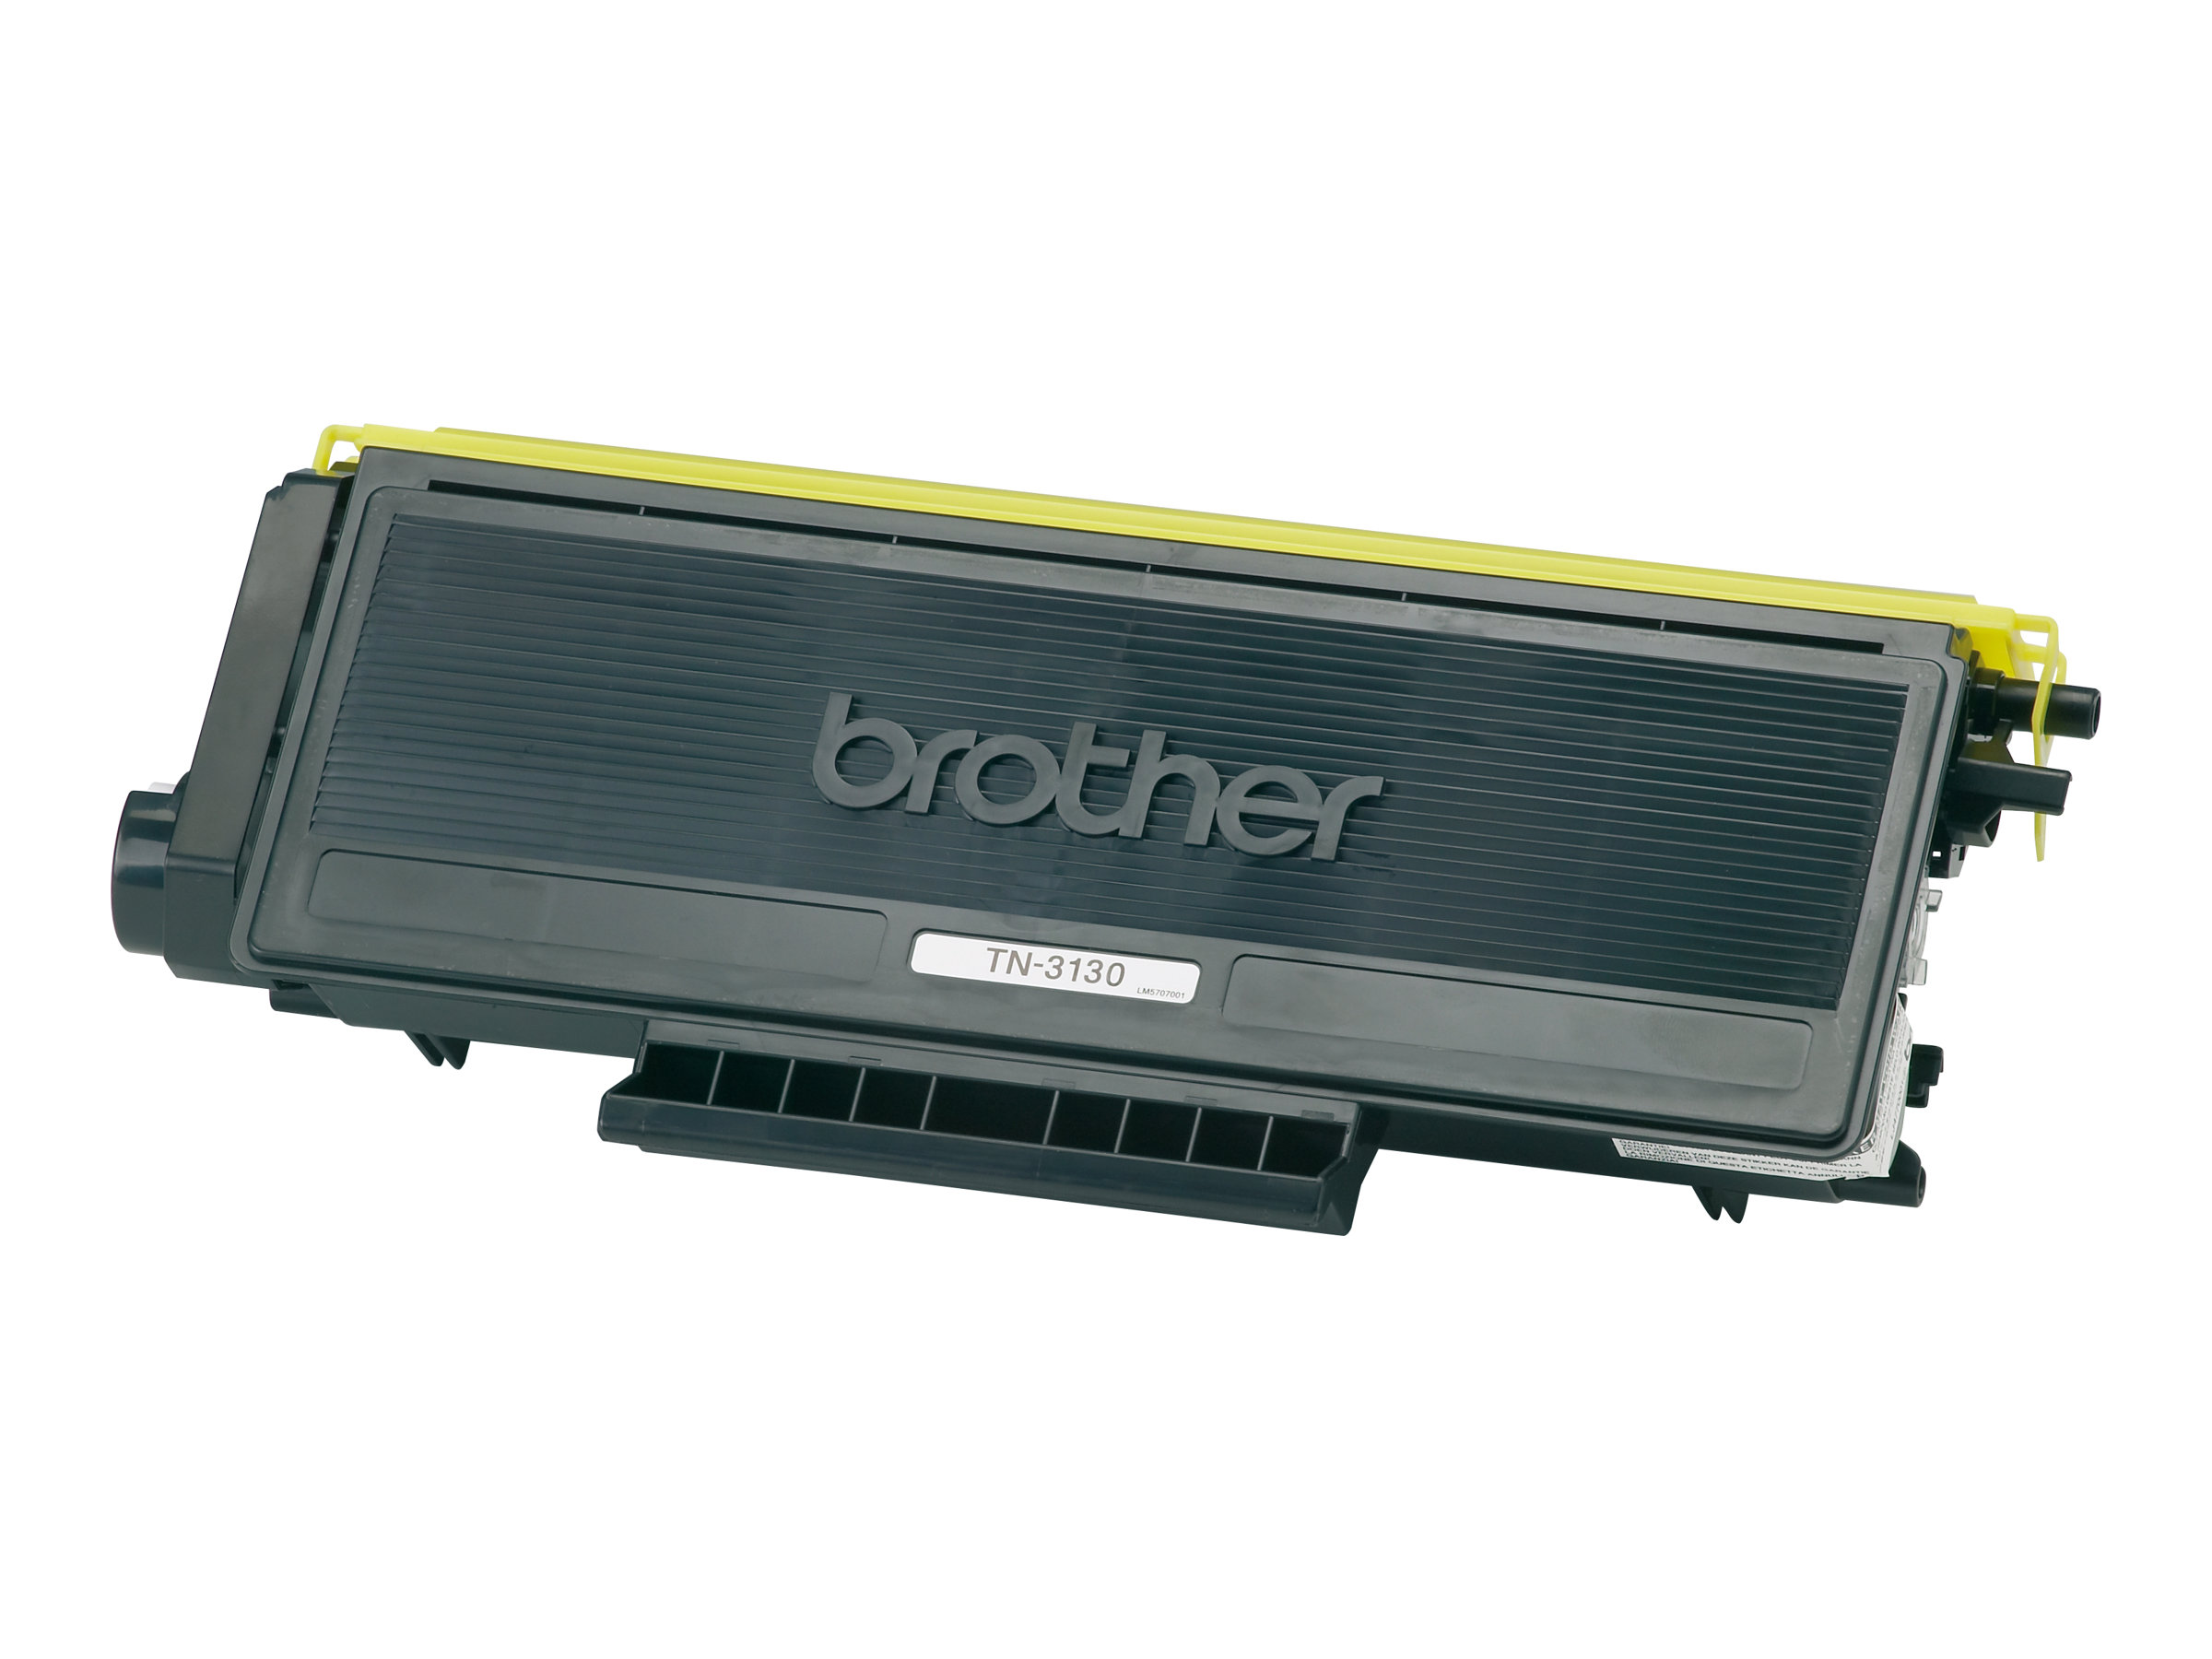 Brother TN3130 - Noir - original - cartouche de toner - pour Brother DCP-8060, 8065, HL-5240, 5250, 5270, 5280, MFC-8460, 8860, 8870 - TN3130 - Cartouches de toner Brother